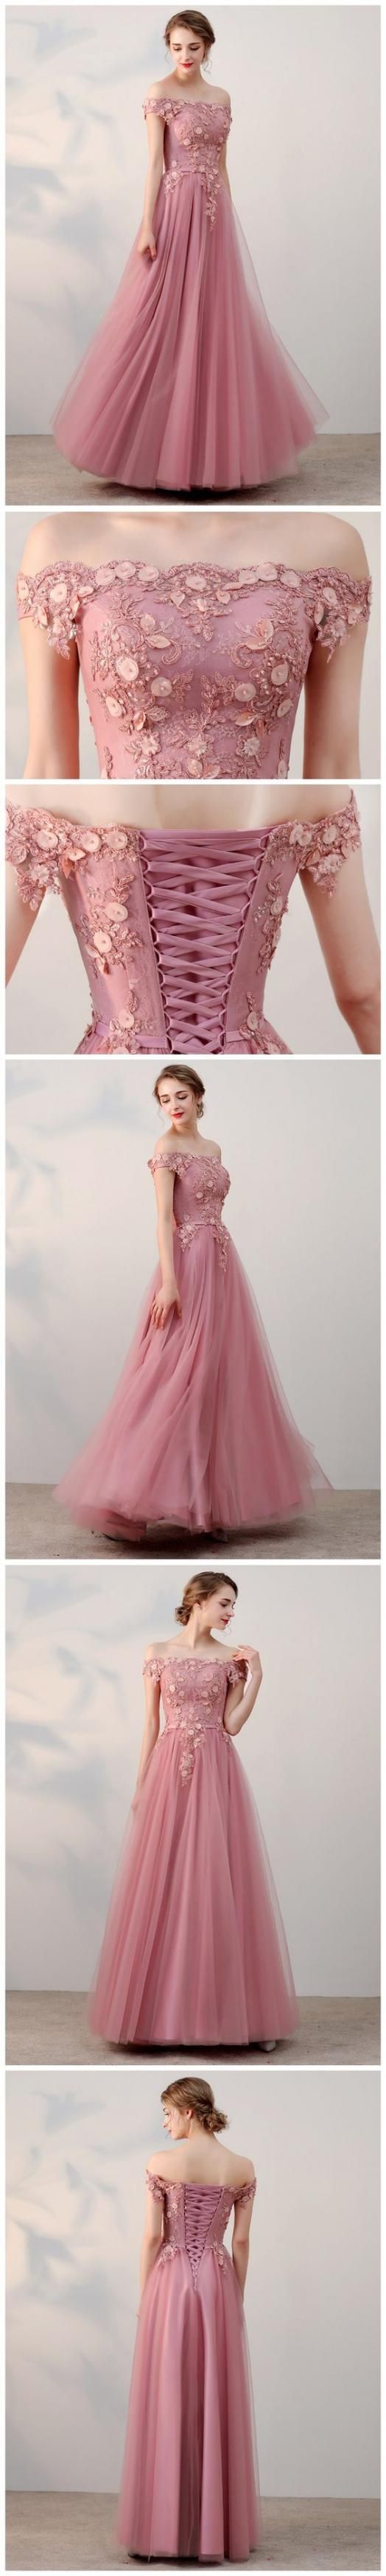 Long Prom Dress, Handmade Prom Dress,prom Dresses,,evening Dress, Ball Gown Prom Dress, Formal Women Dress,prom Dress M0011